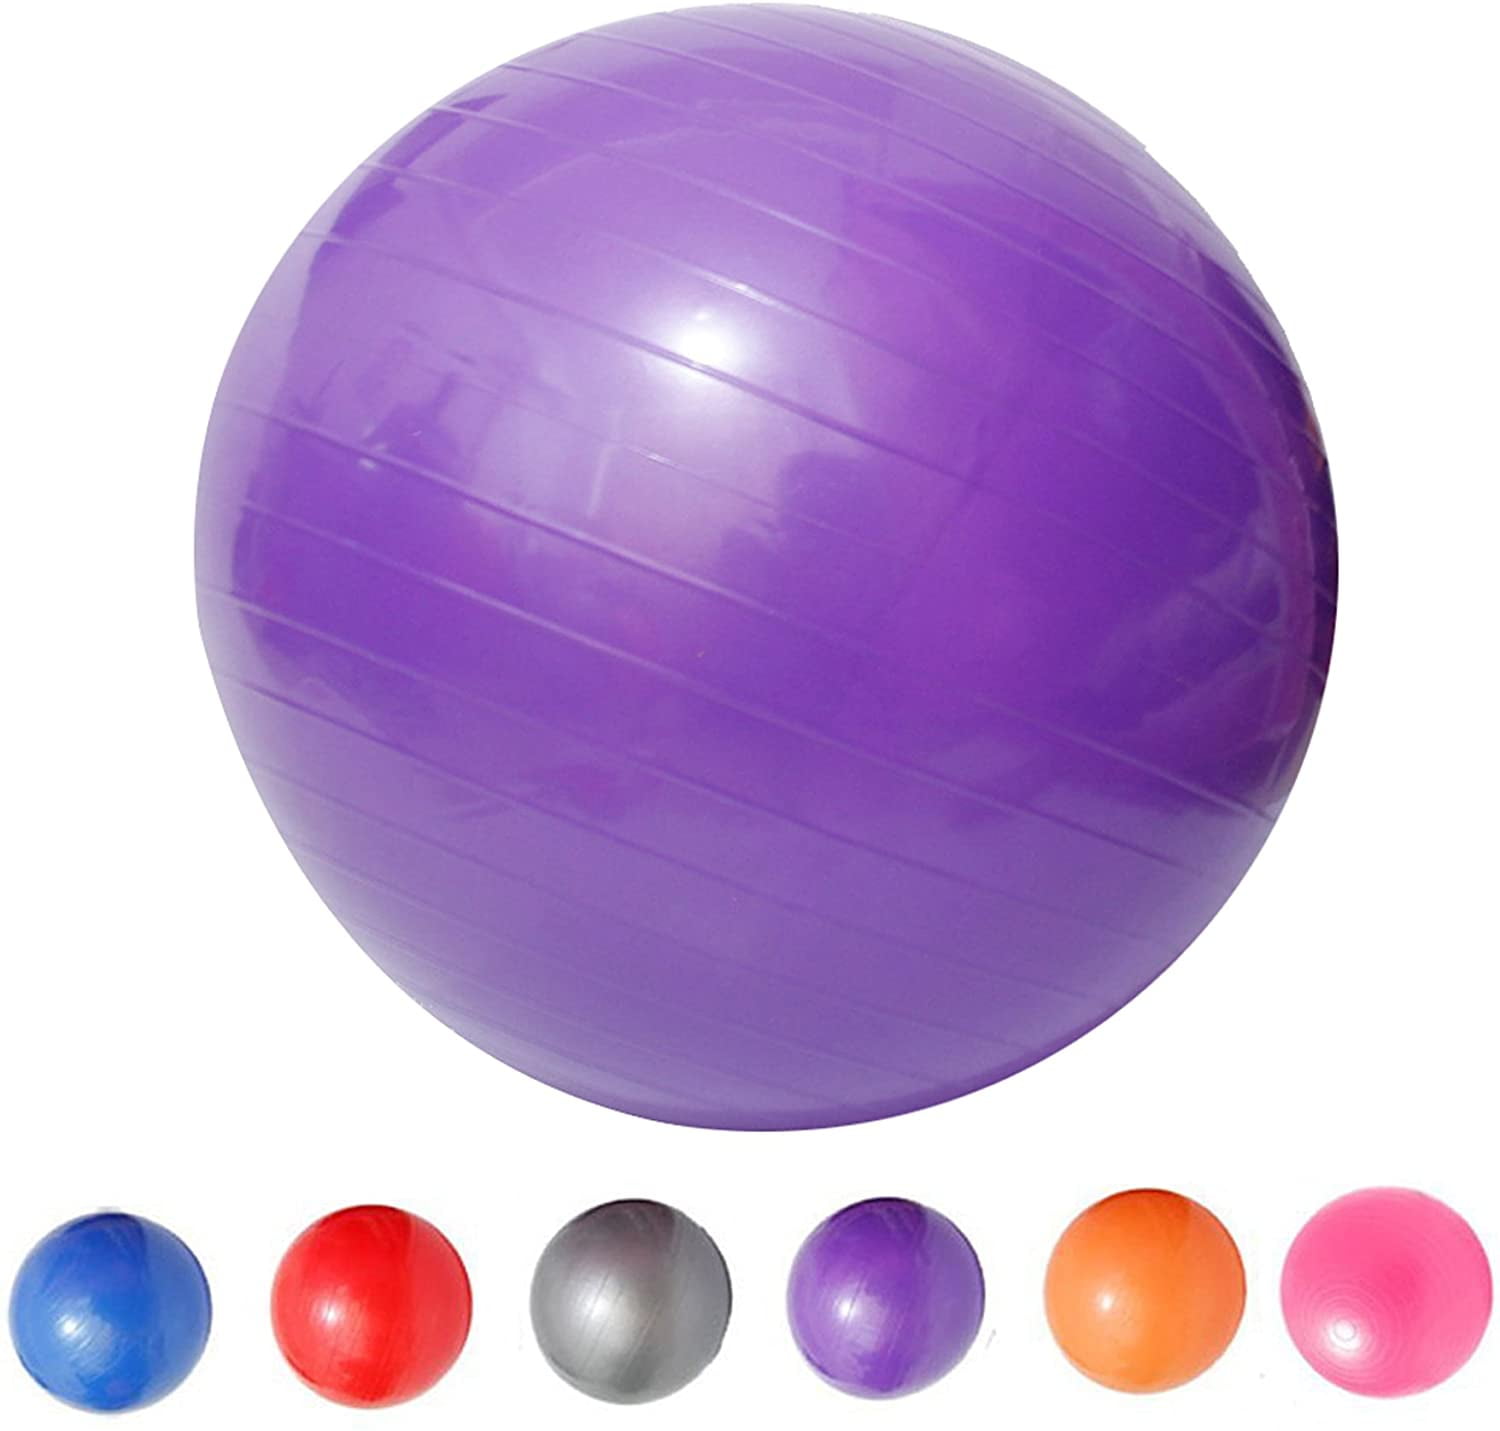 Anti-Burst Diameter Balance Stability Fitness Exercise Yoga Ball Foot Pump Gift 